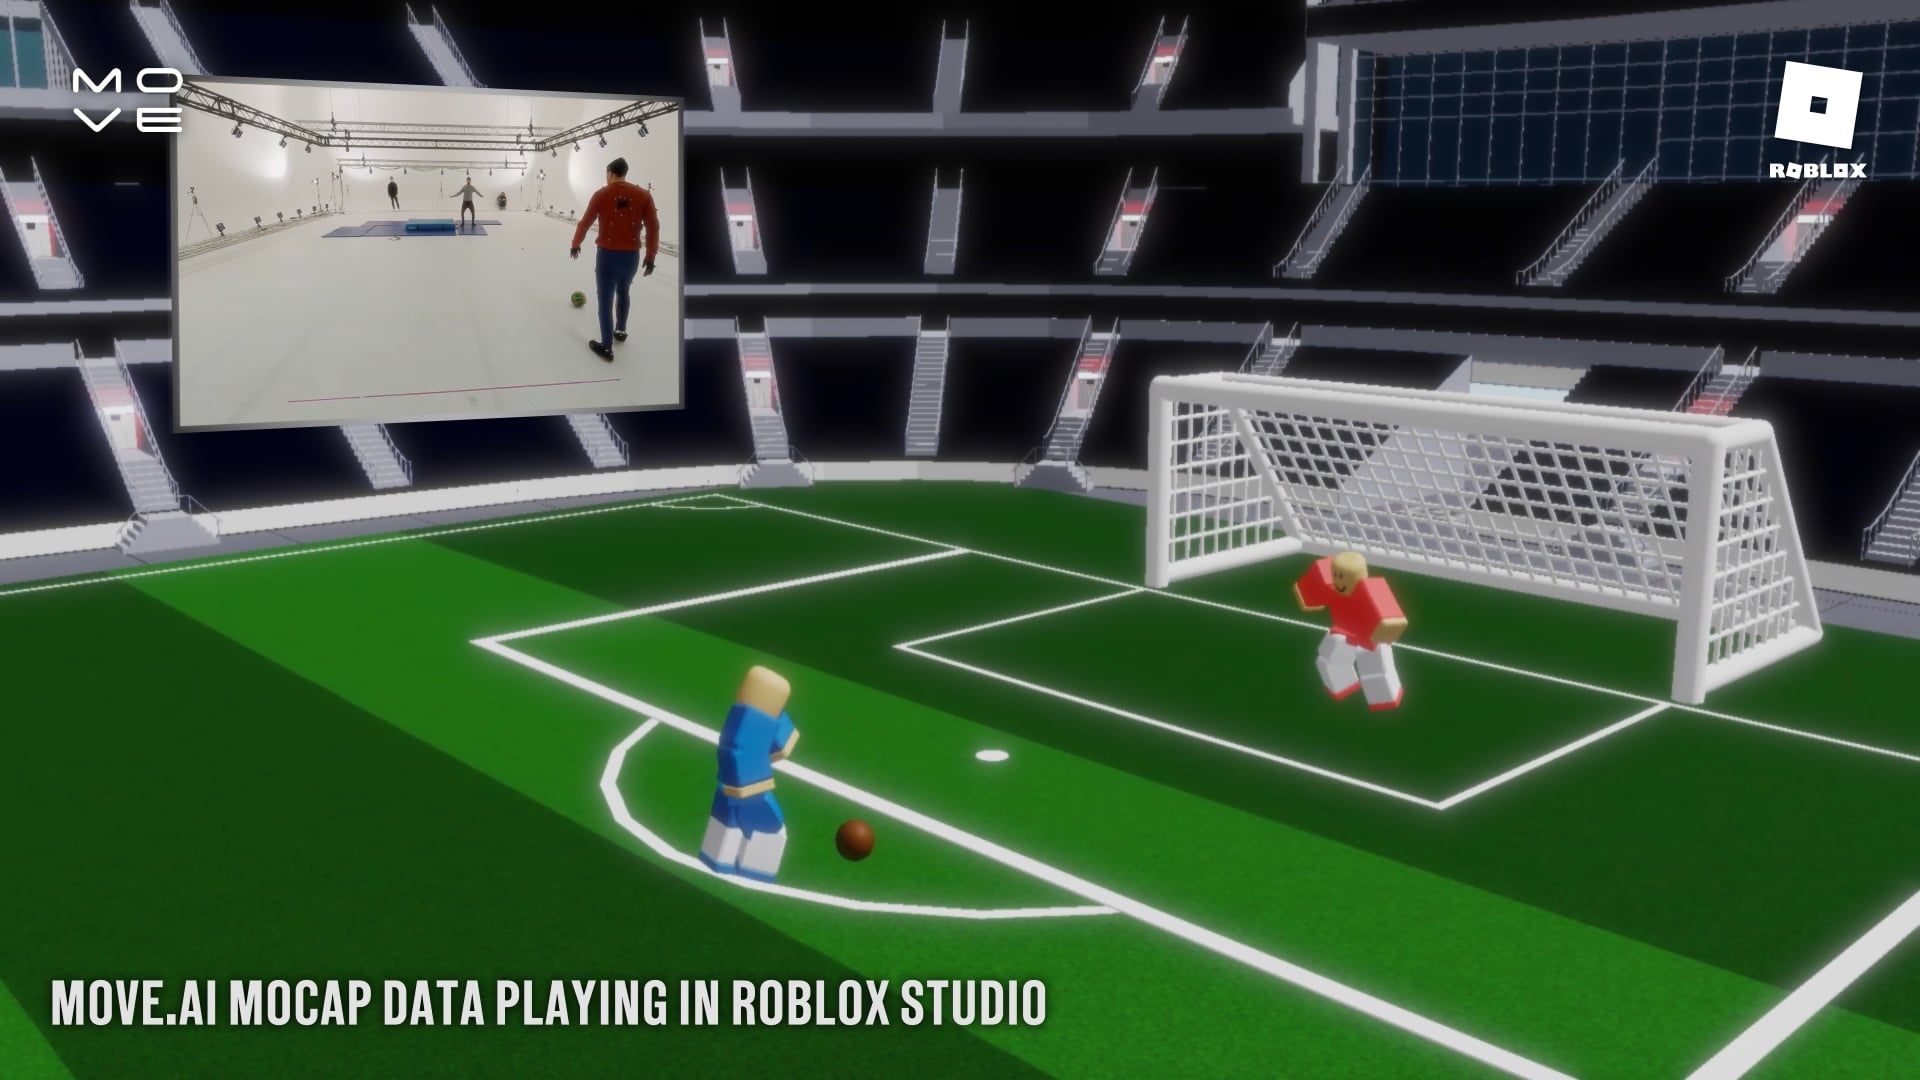 Roblox-Football-03 on Vimeo